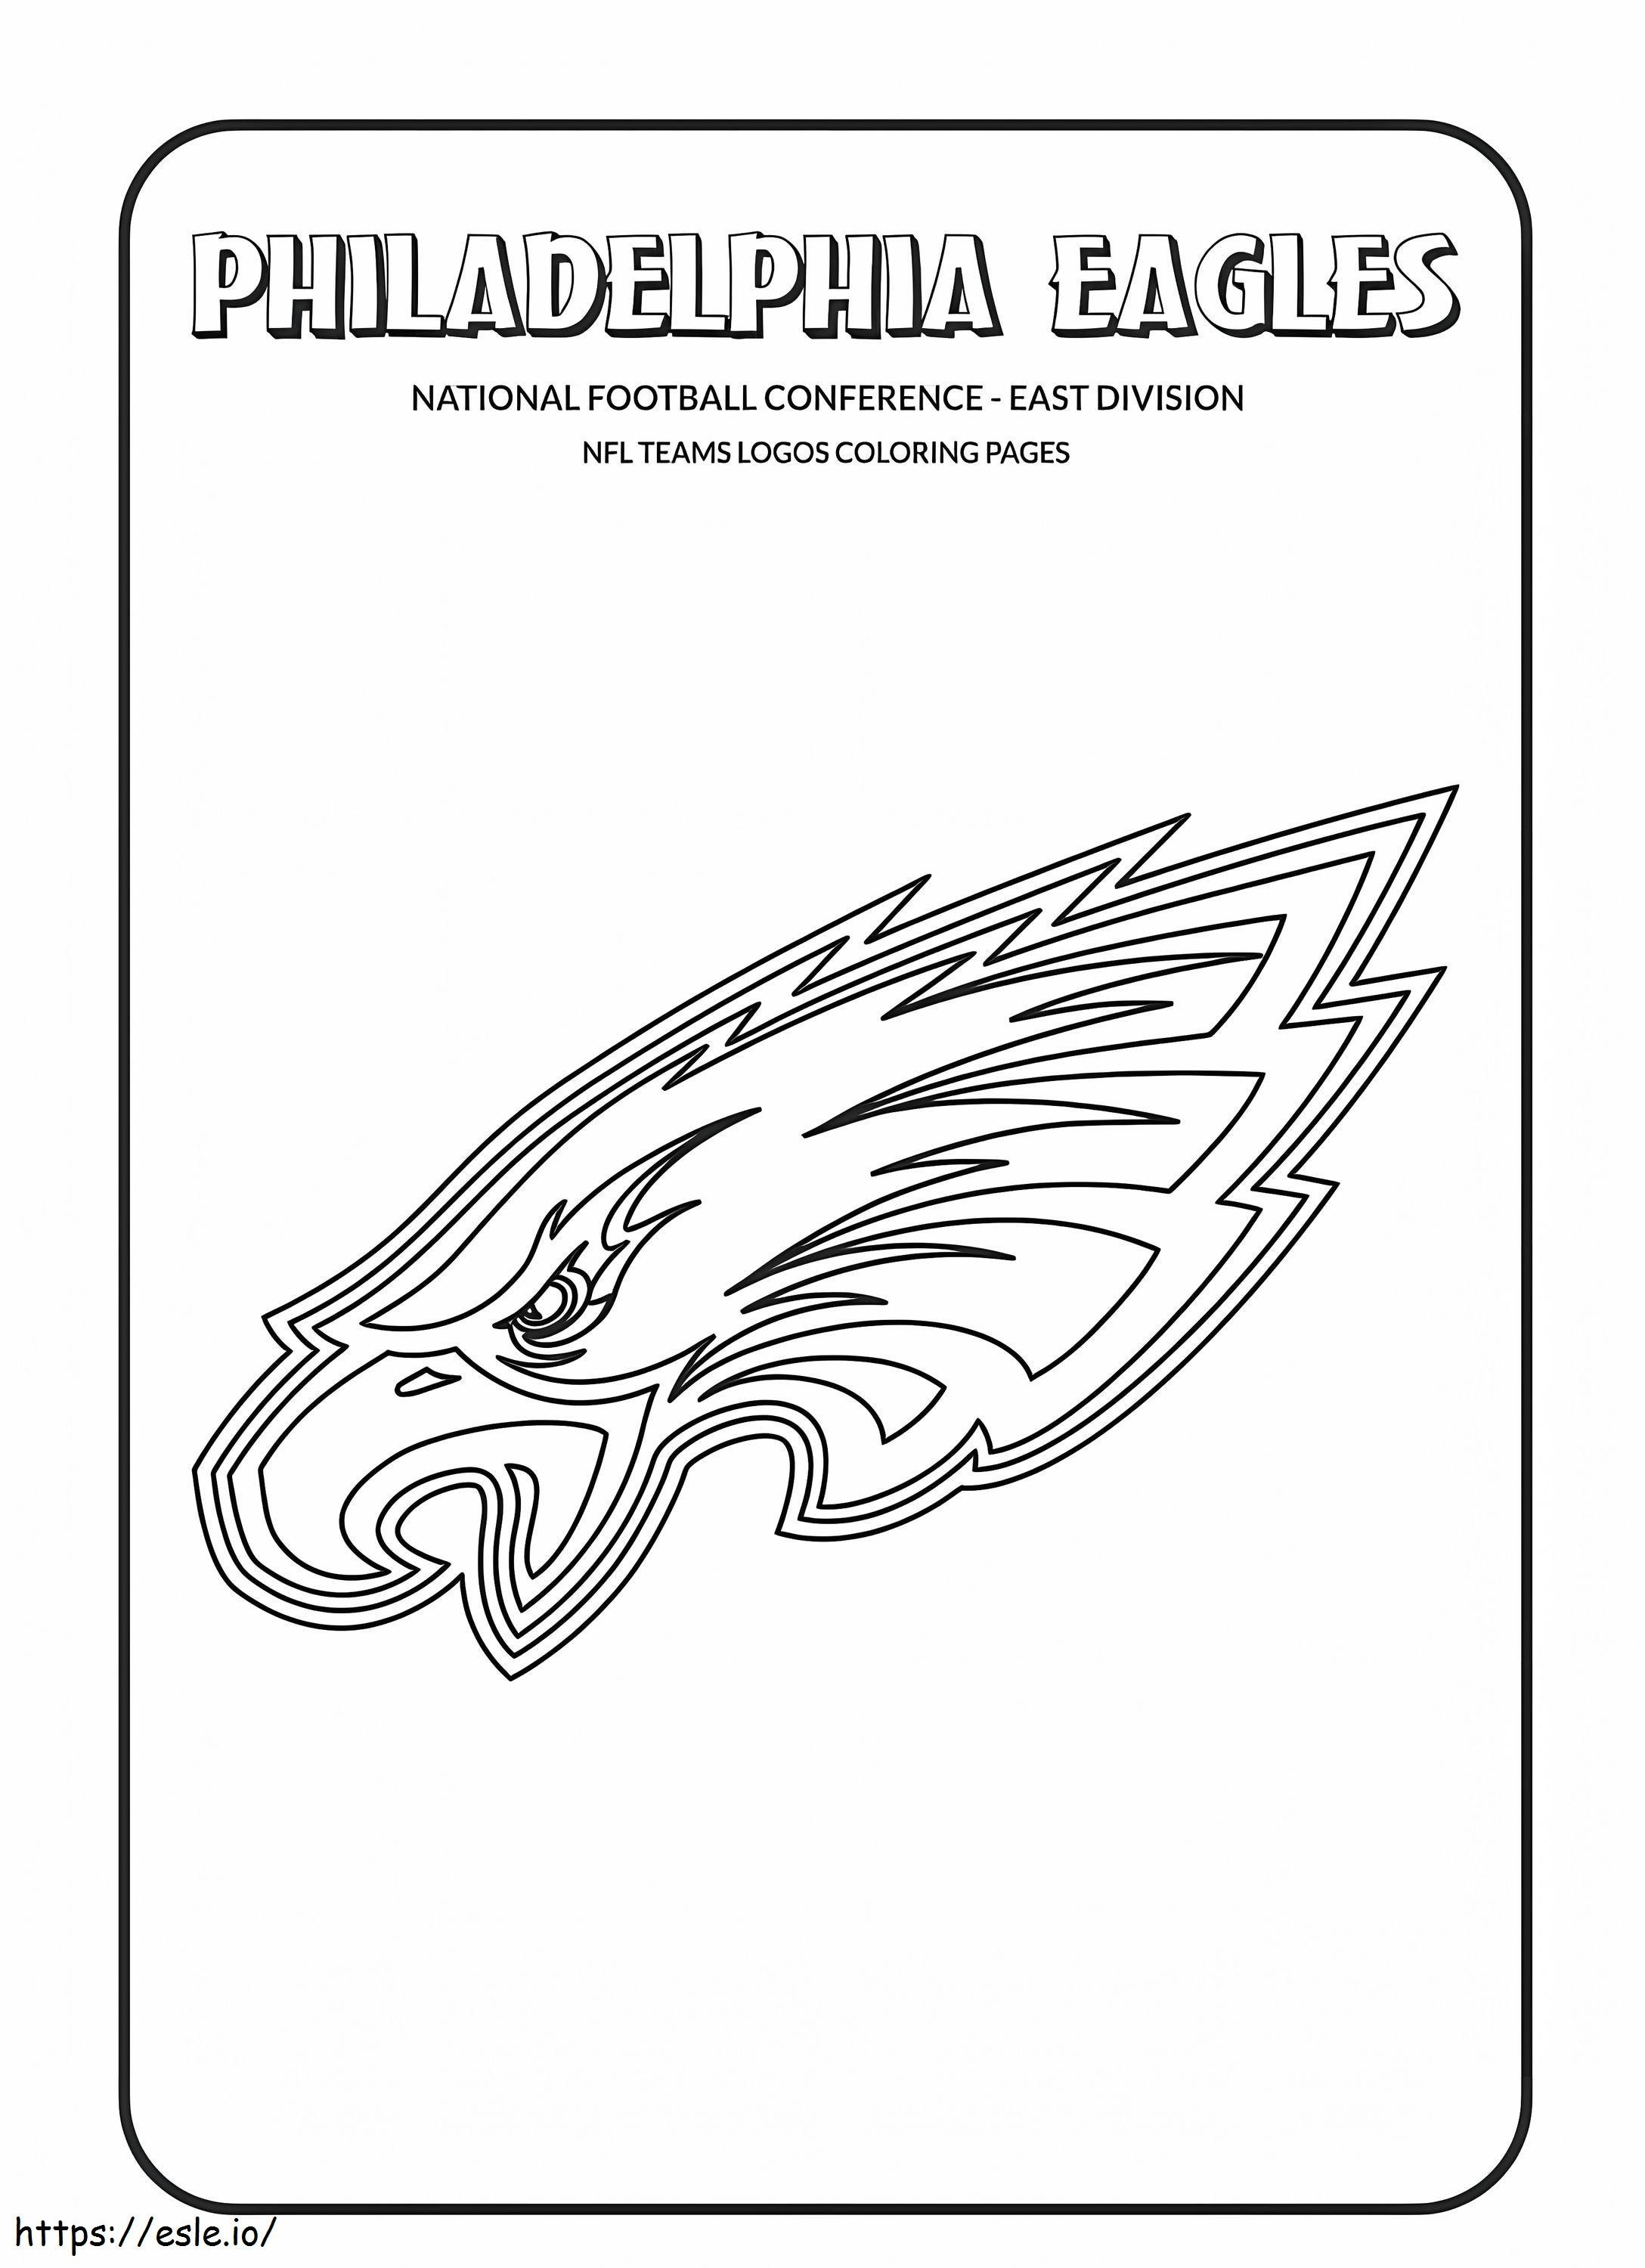 Małe logo Philadelphia Eagles kolorowanka